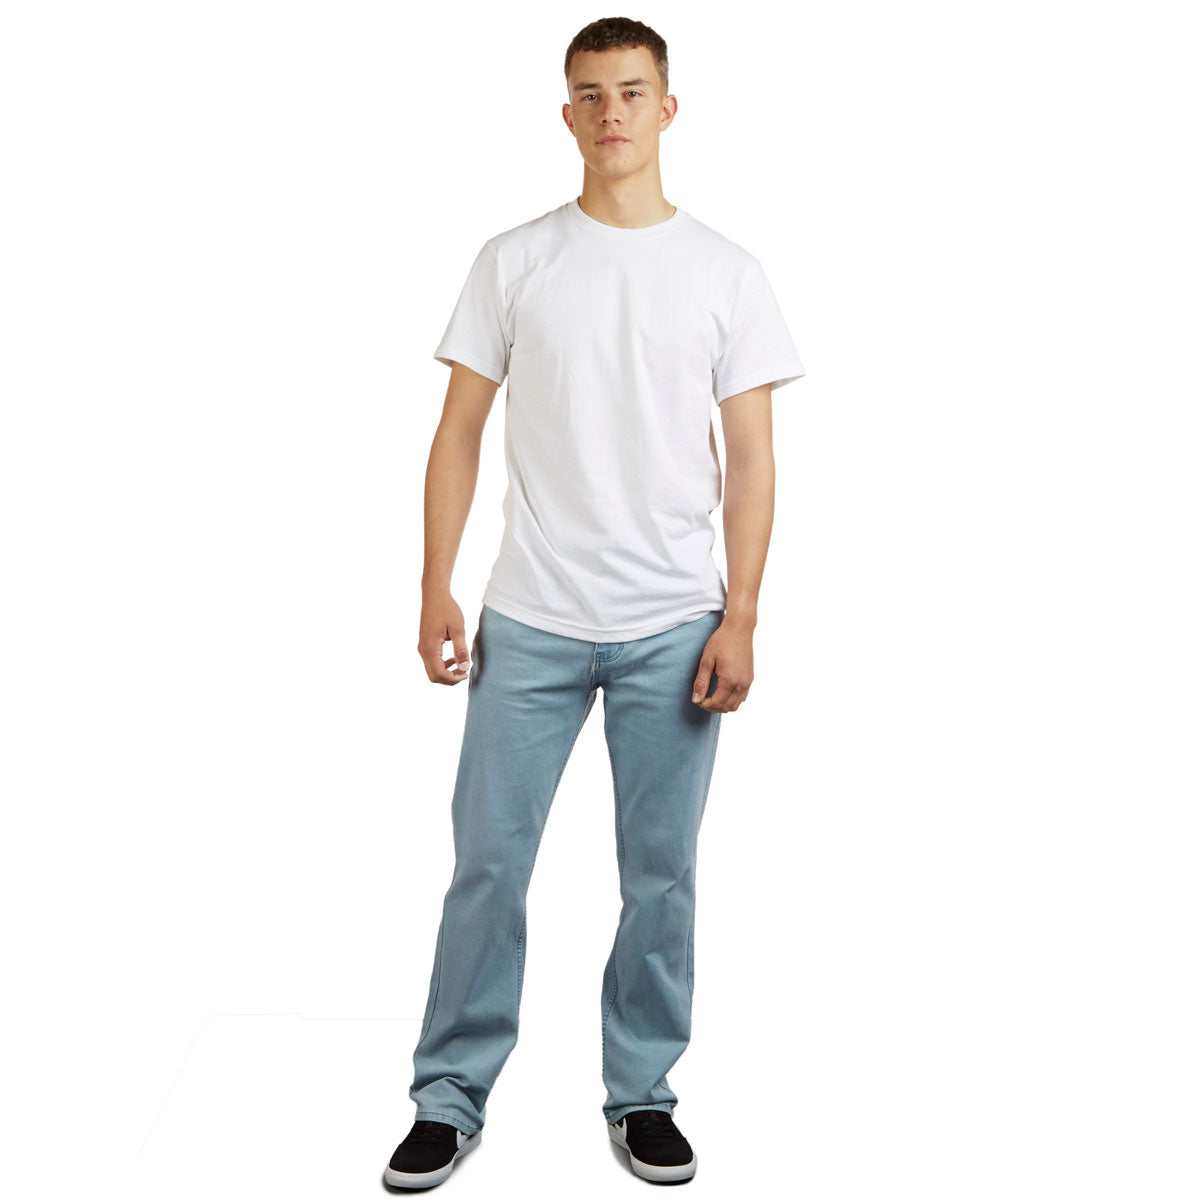 CCS Standard Plus Straight Denim Jeans - New Wash image 2